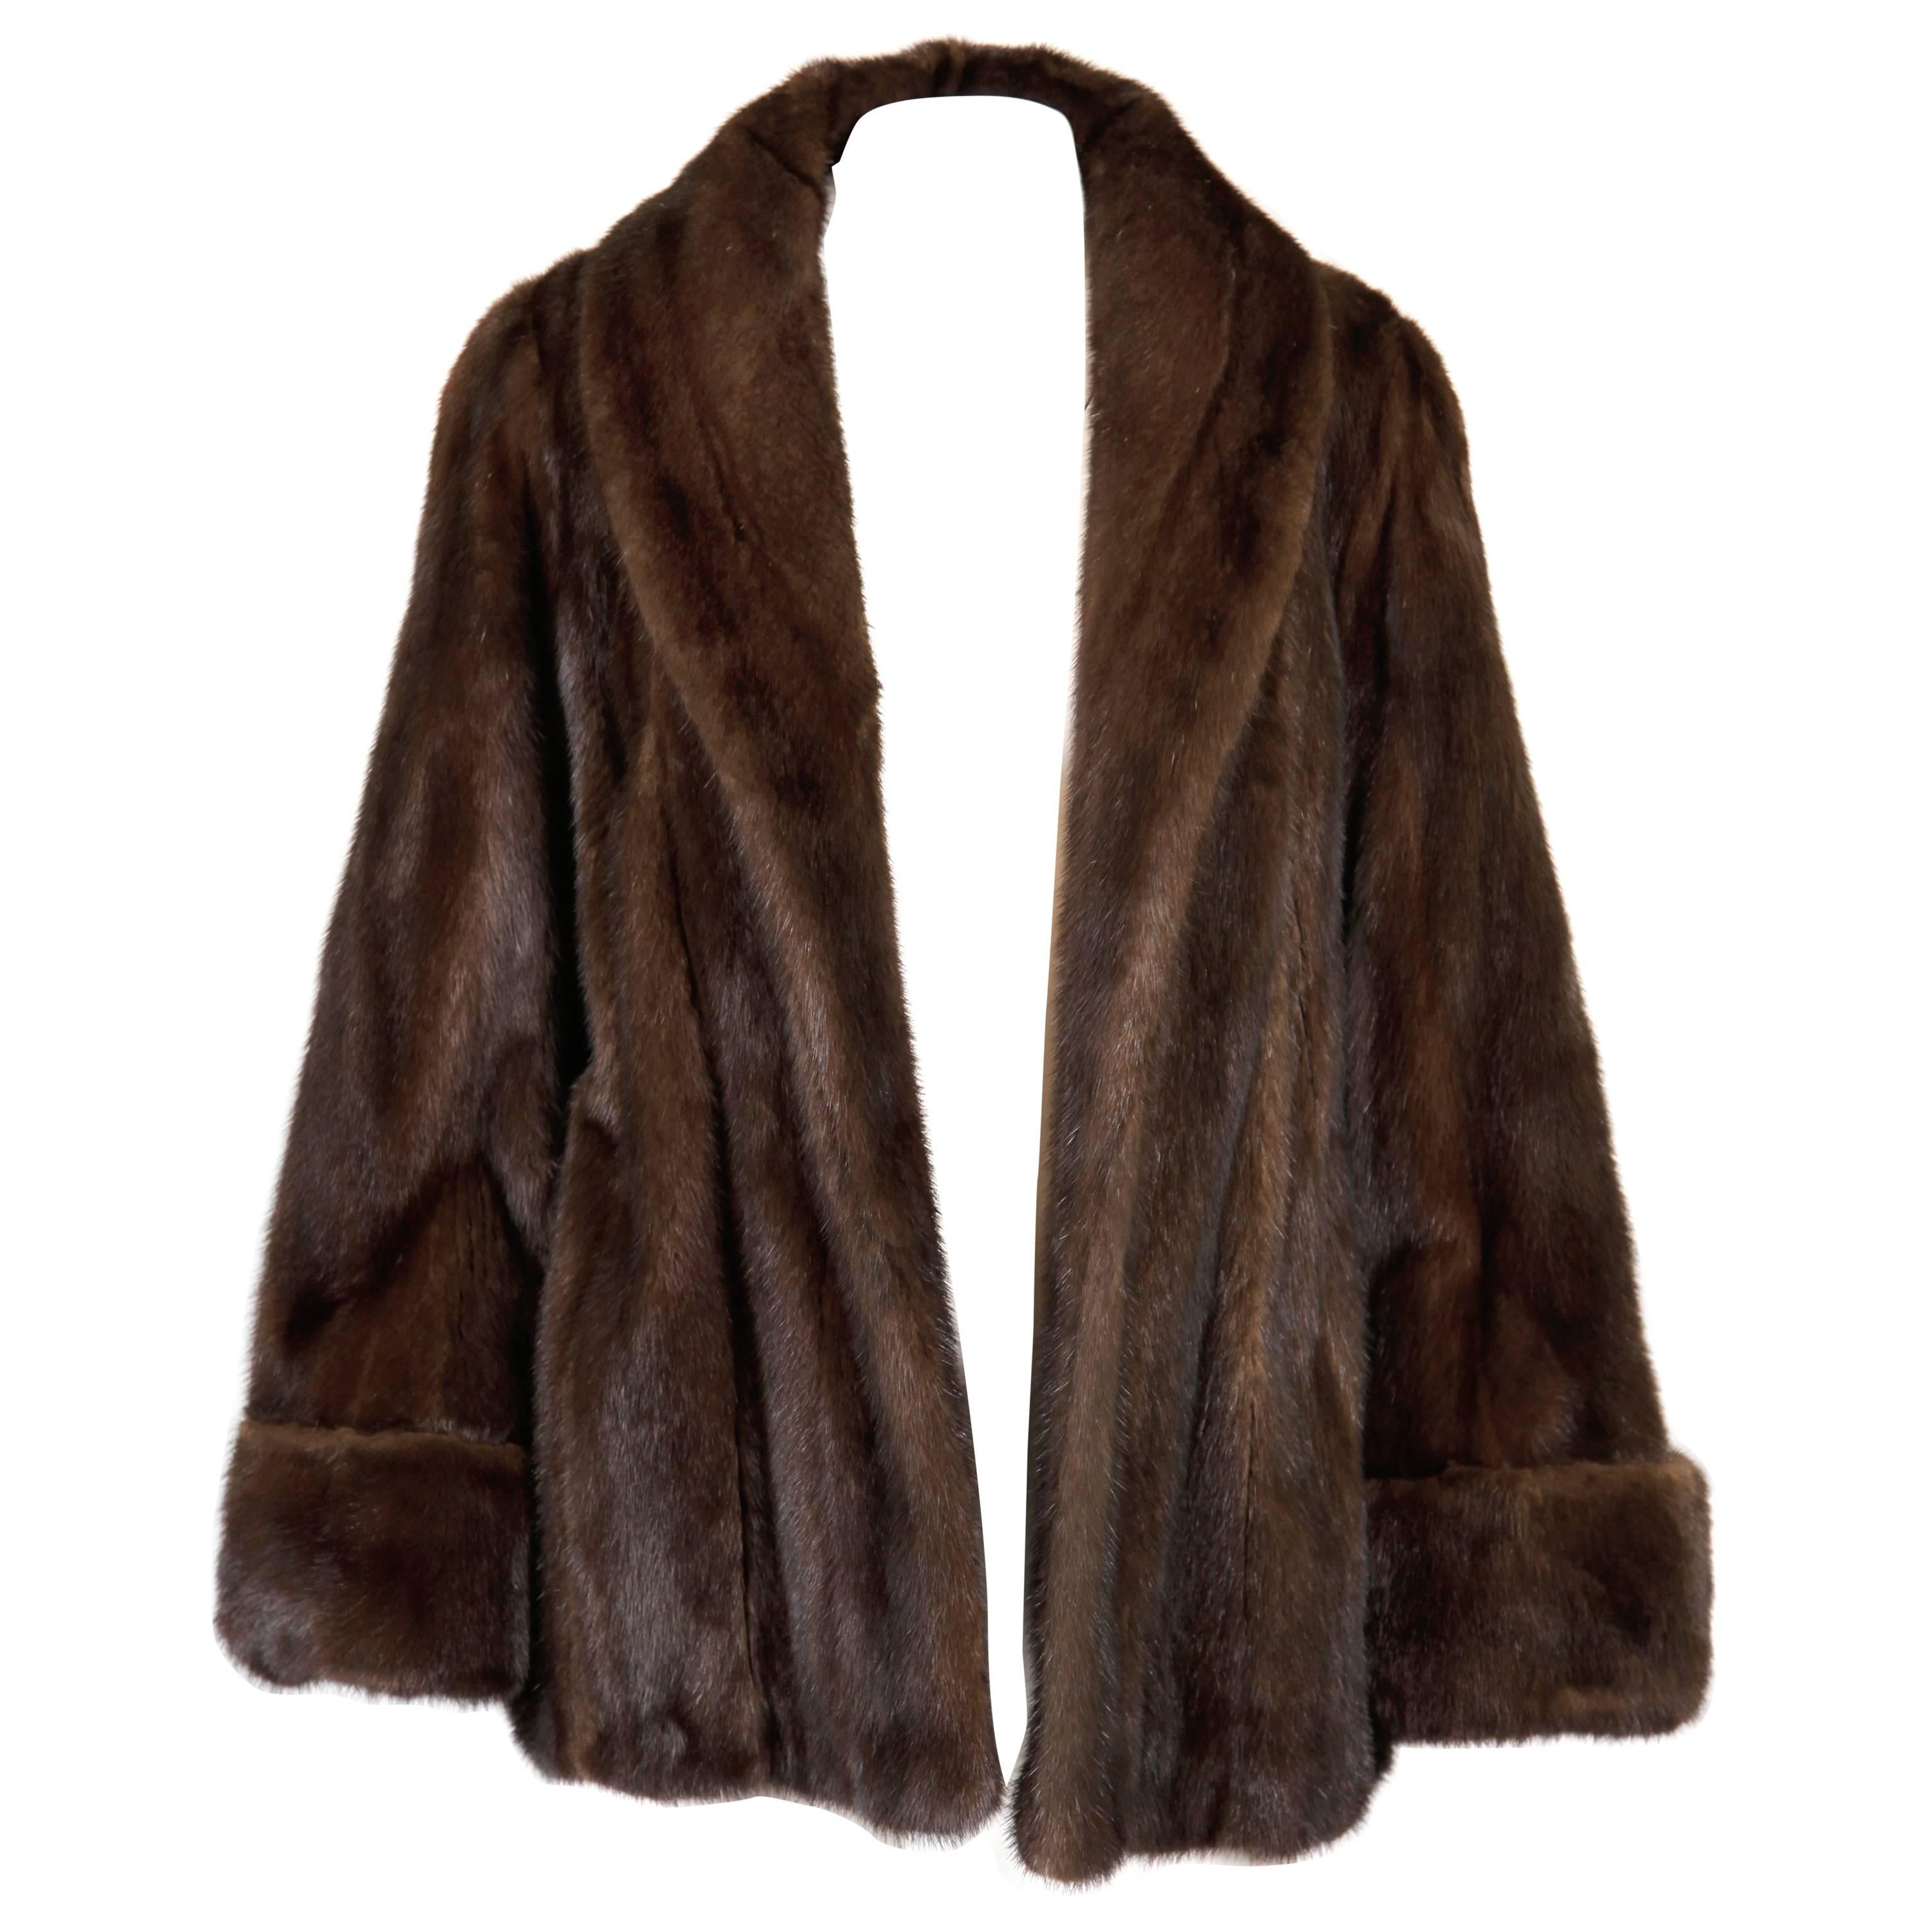 Stunning 1970s Bill Blass Brown Mink Fur Jacket or Coat